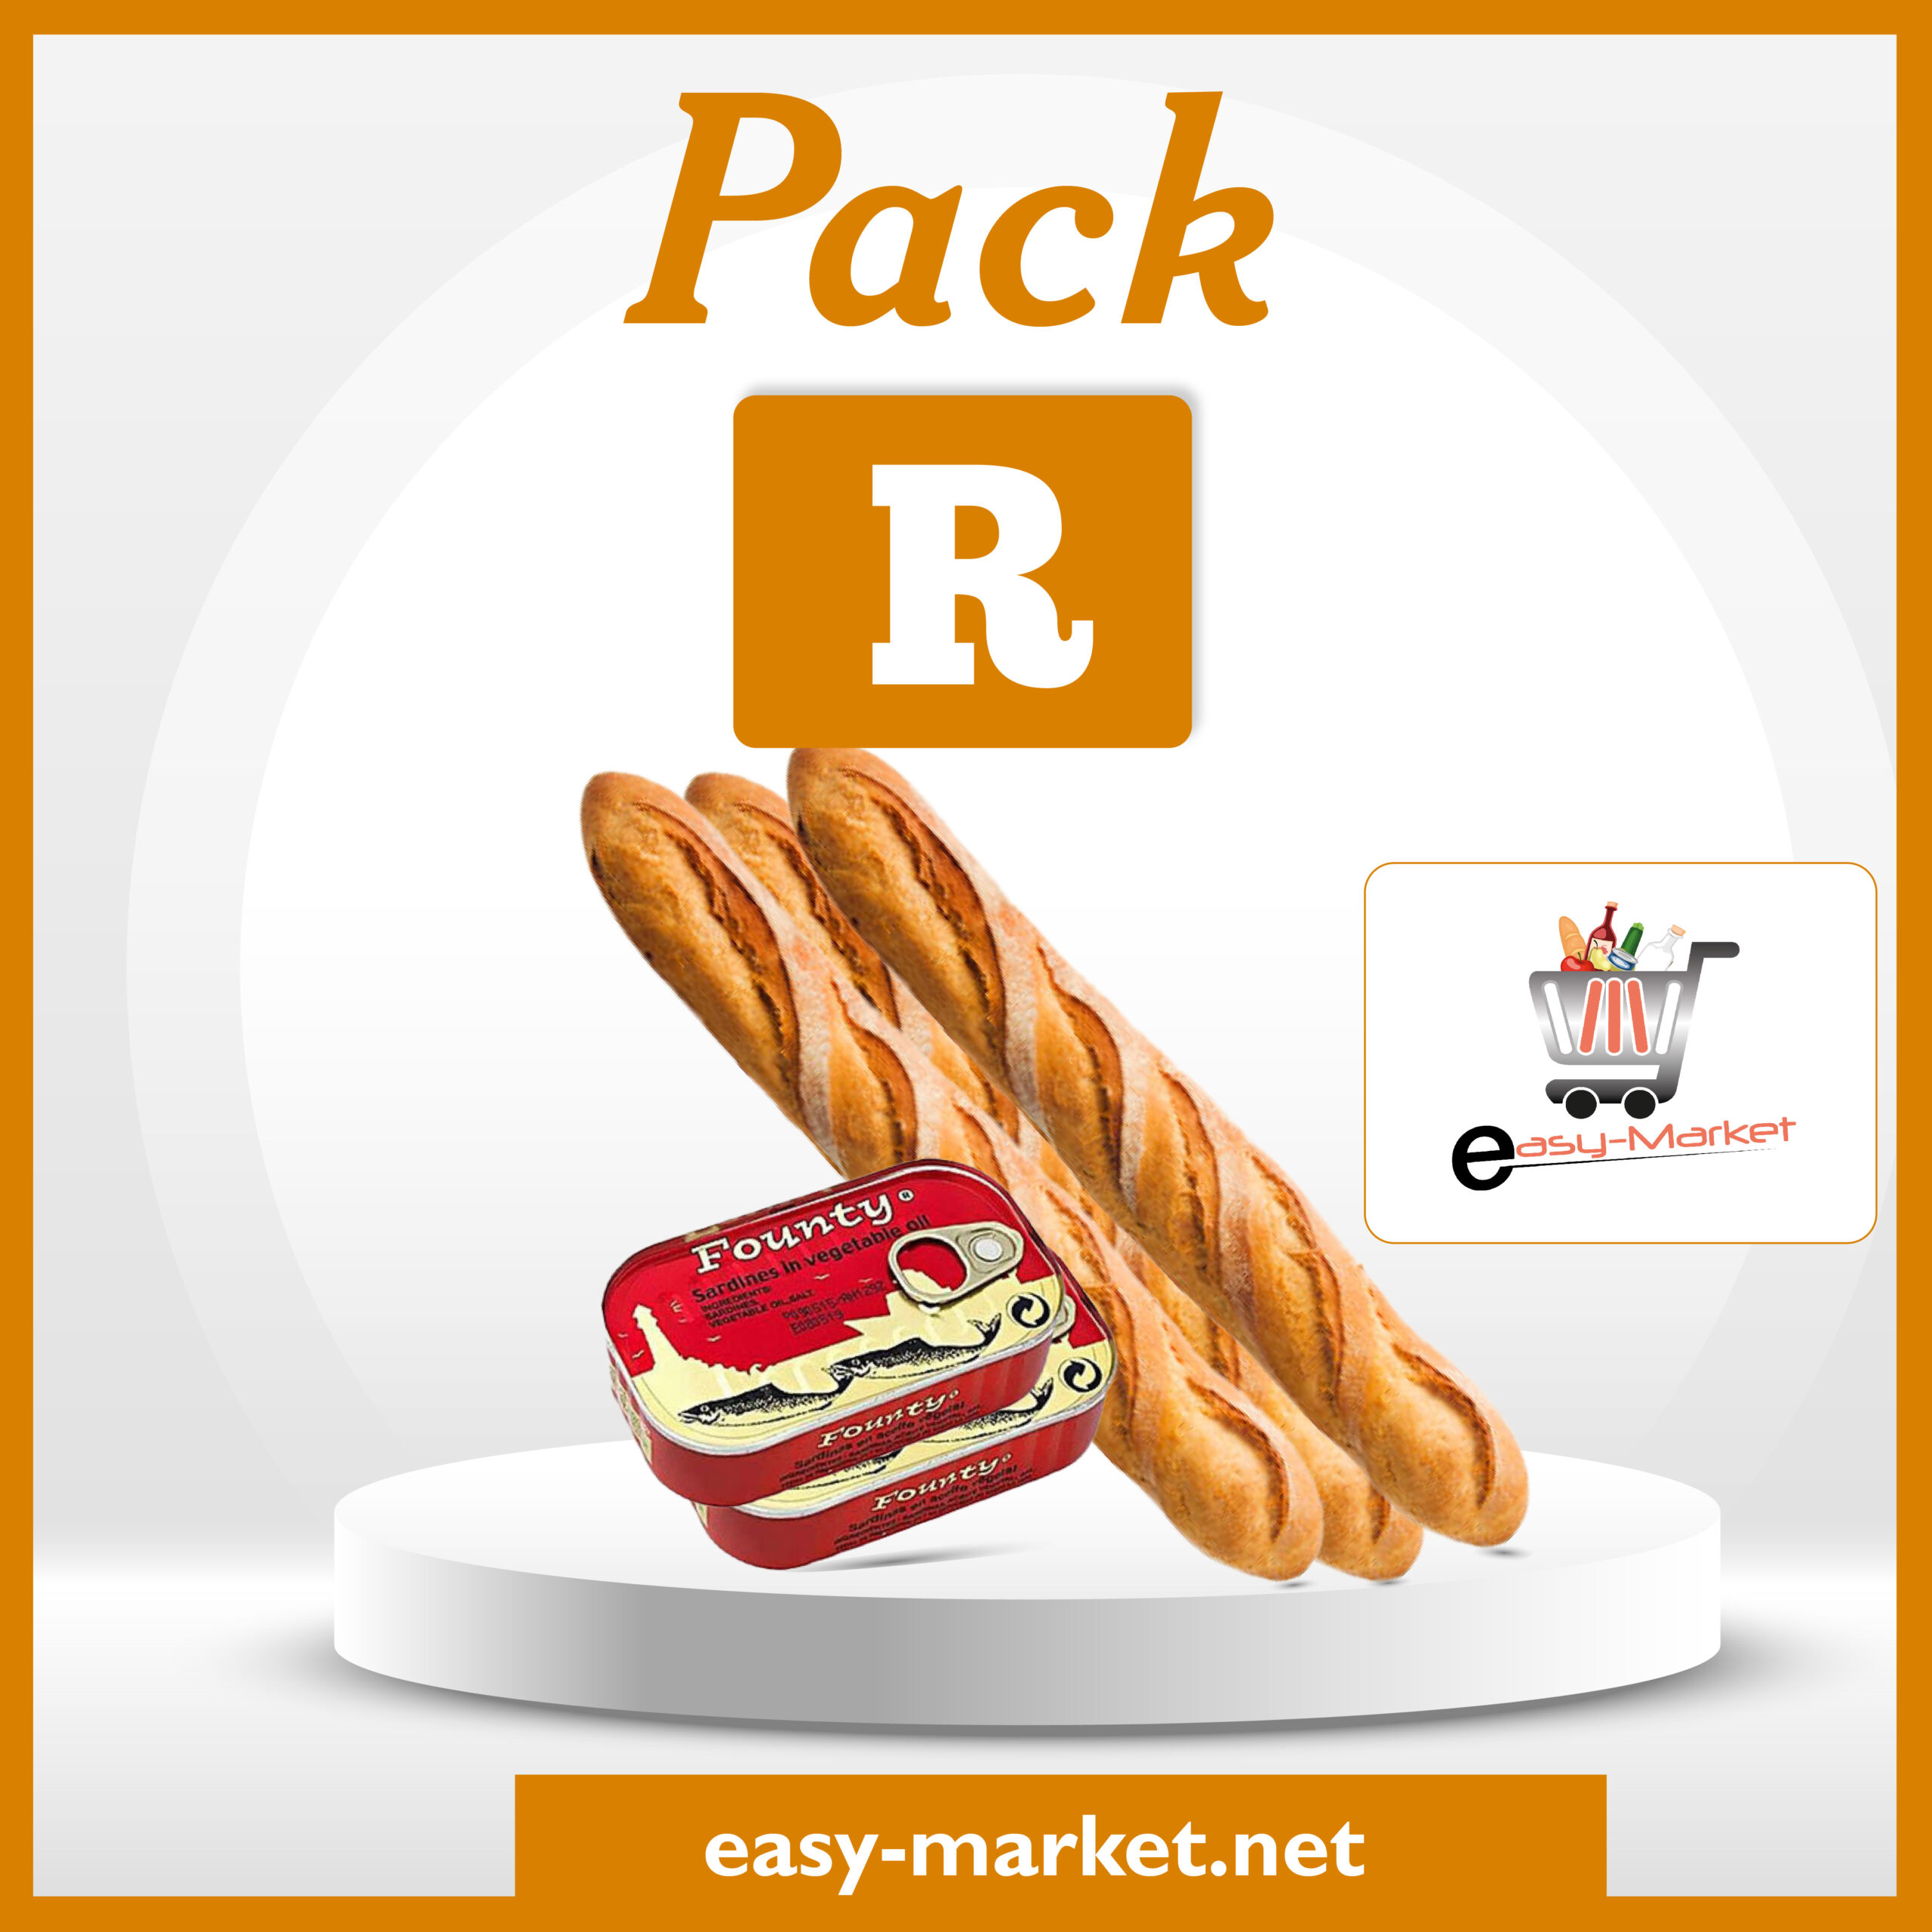 Pack Petit Dej - Easy-Market